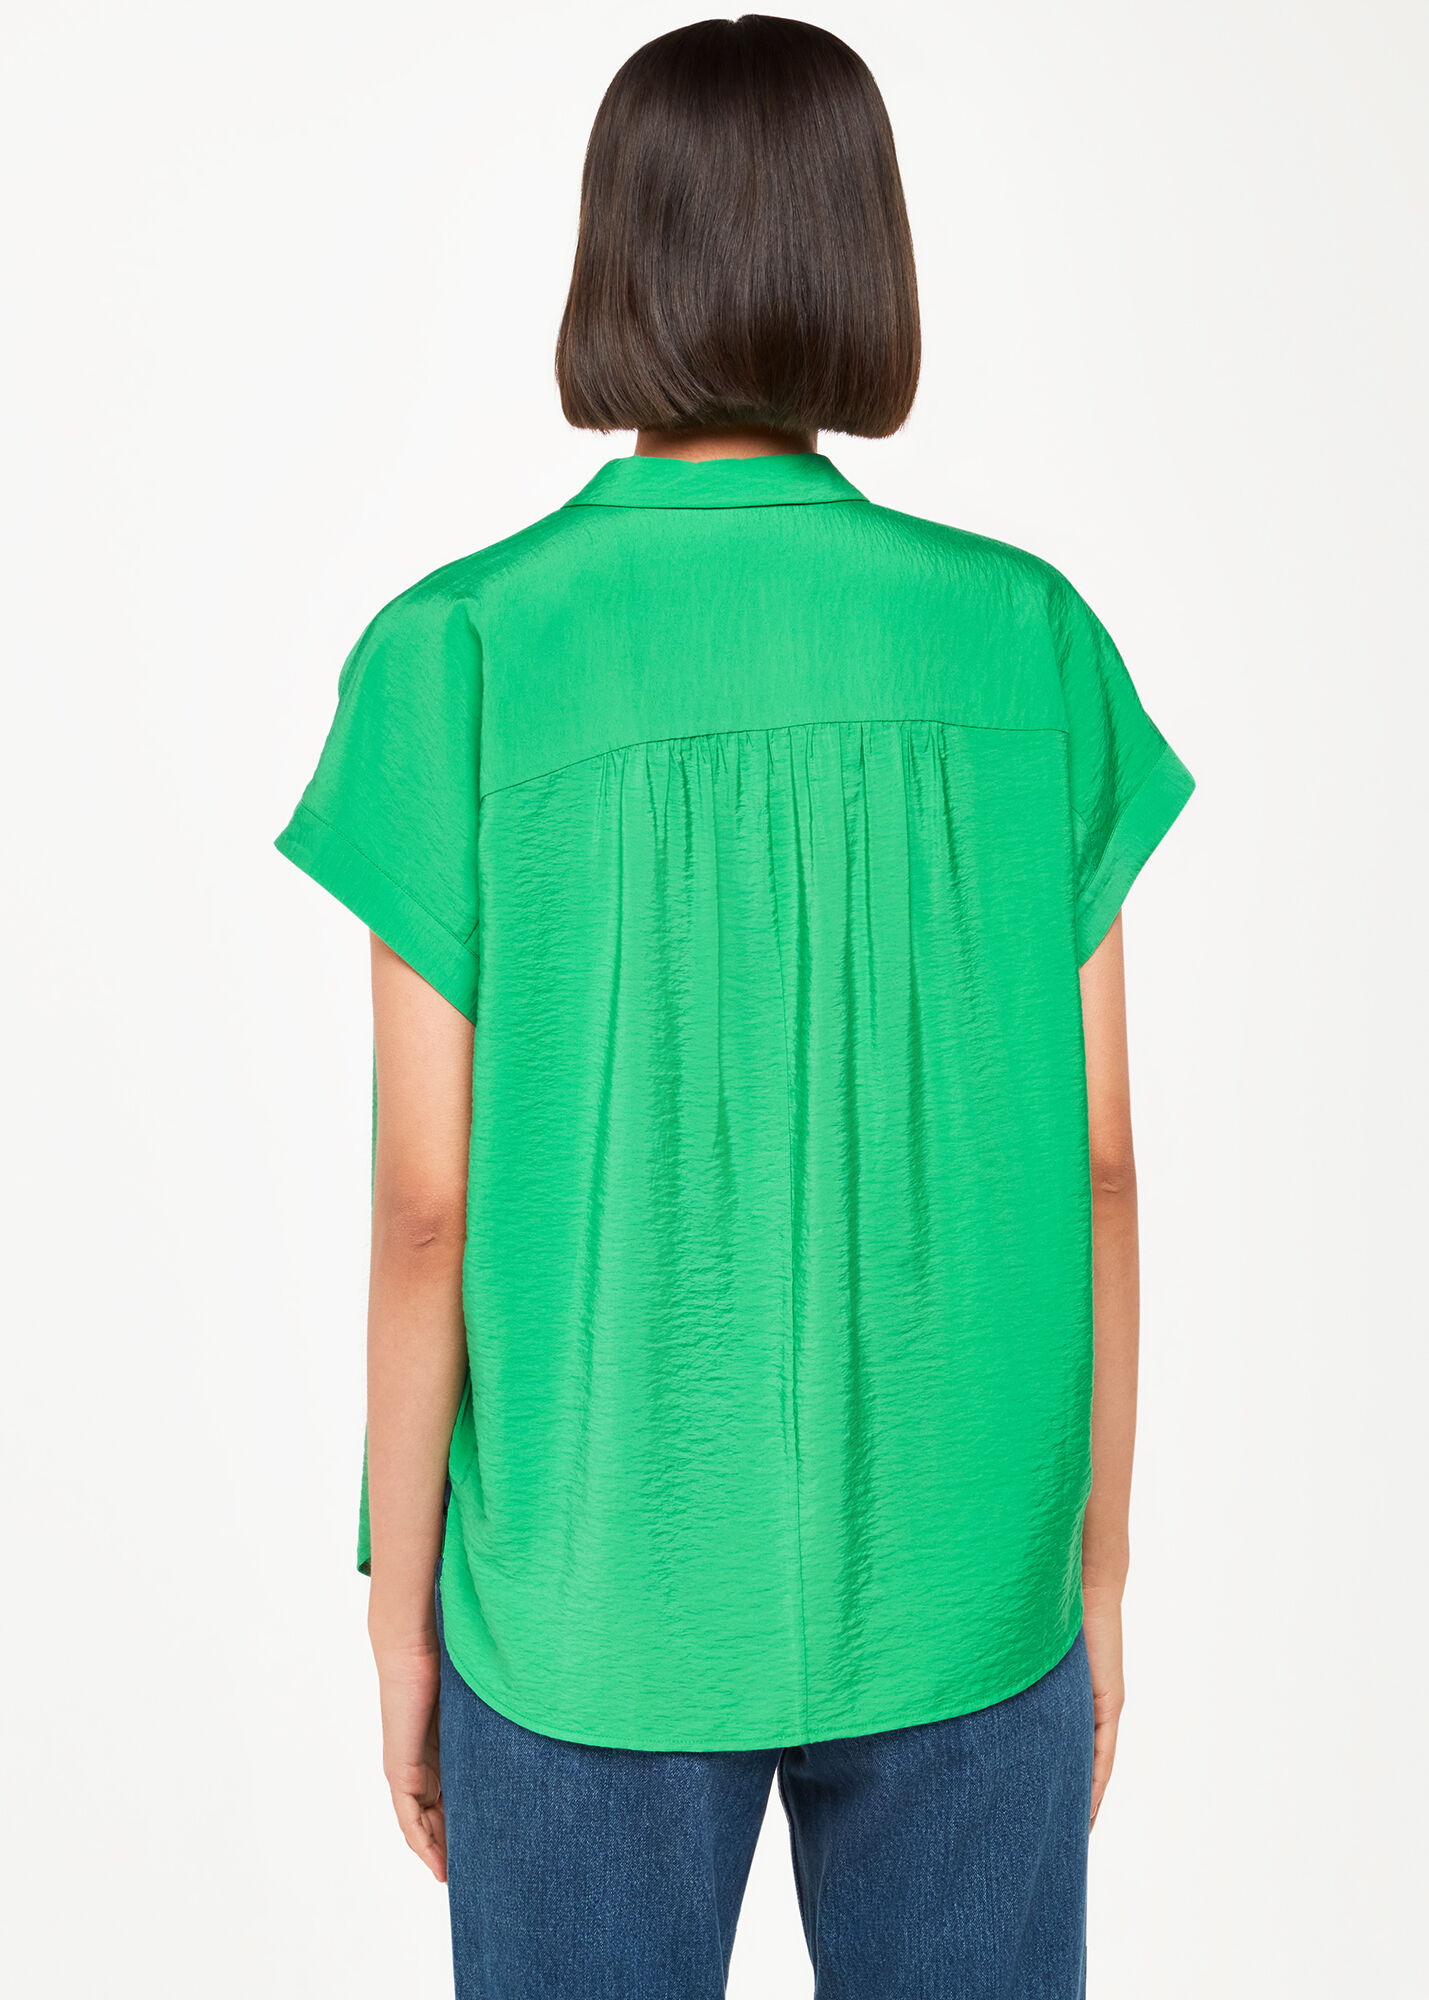 Whistles Bright Green Short Sleeve Shirt | Vibrant Summer Clothing